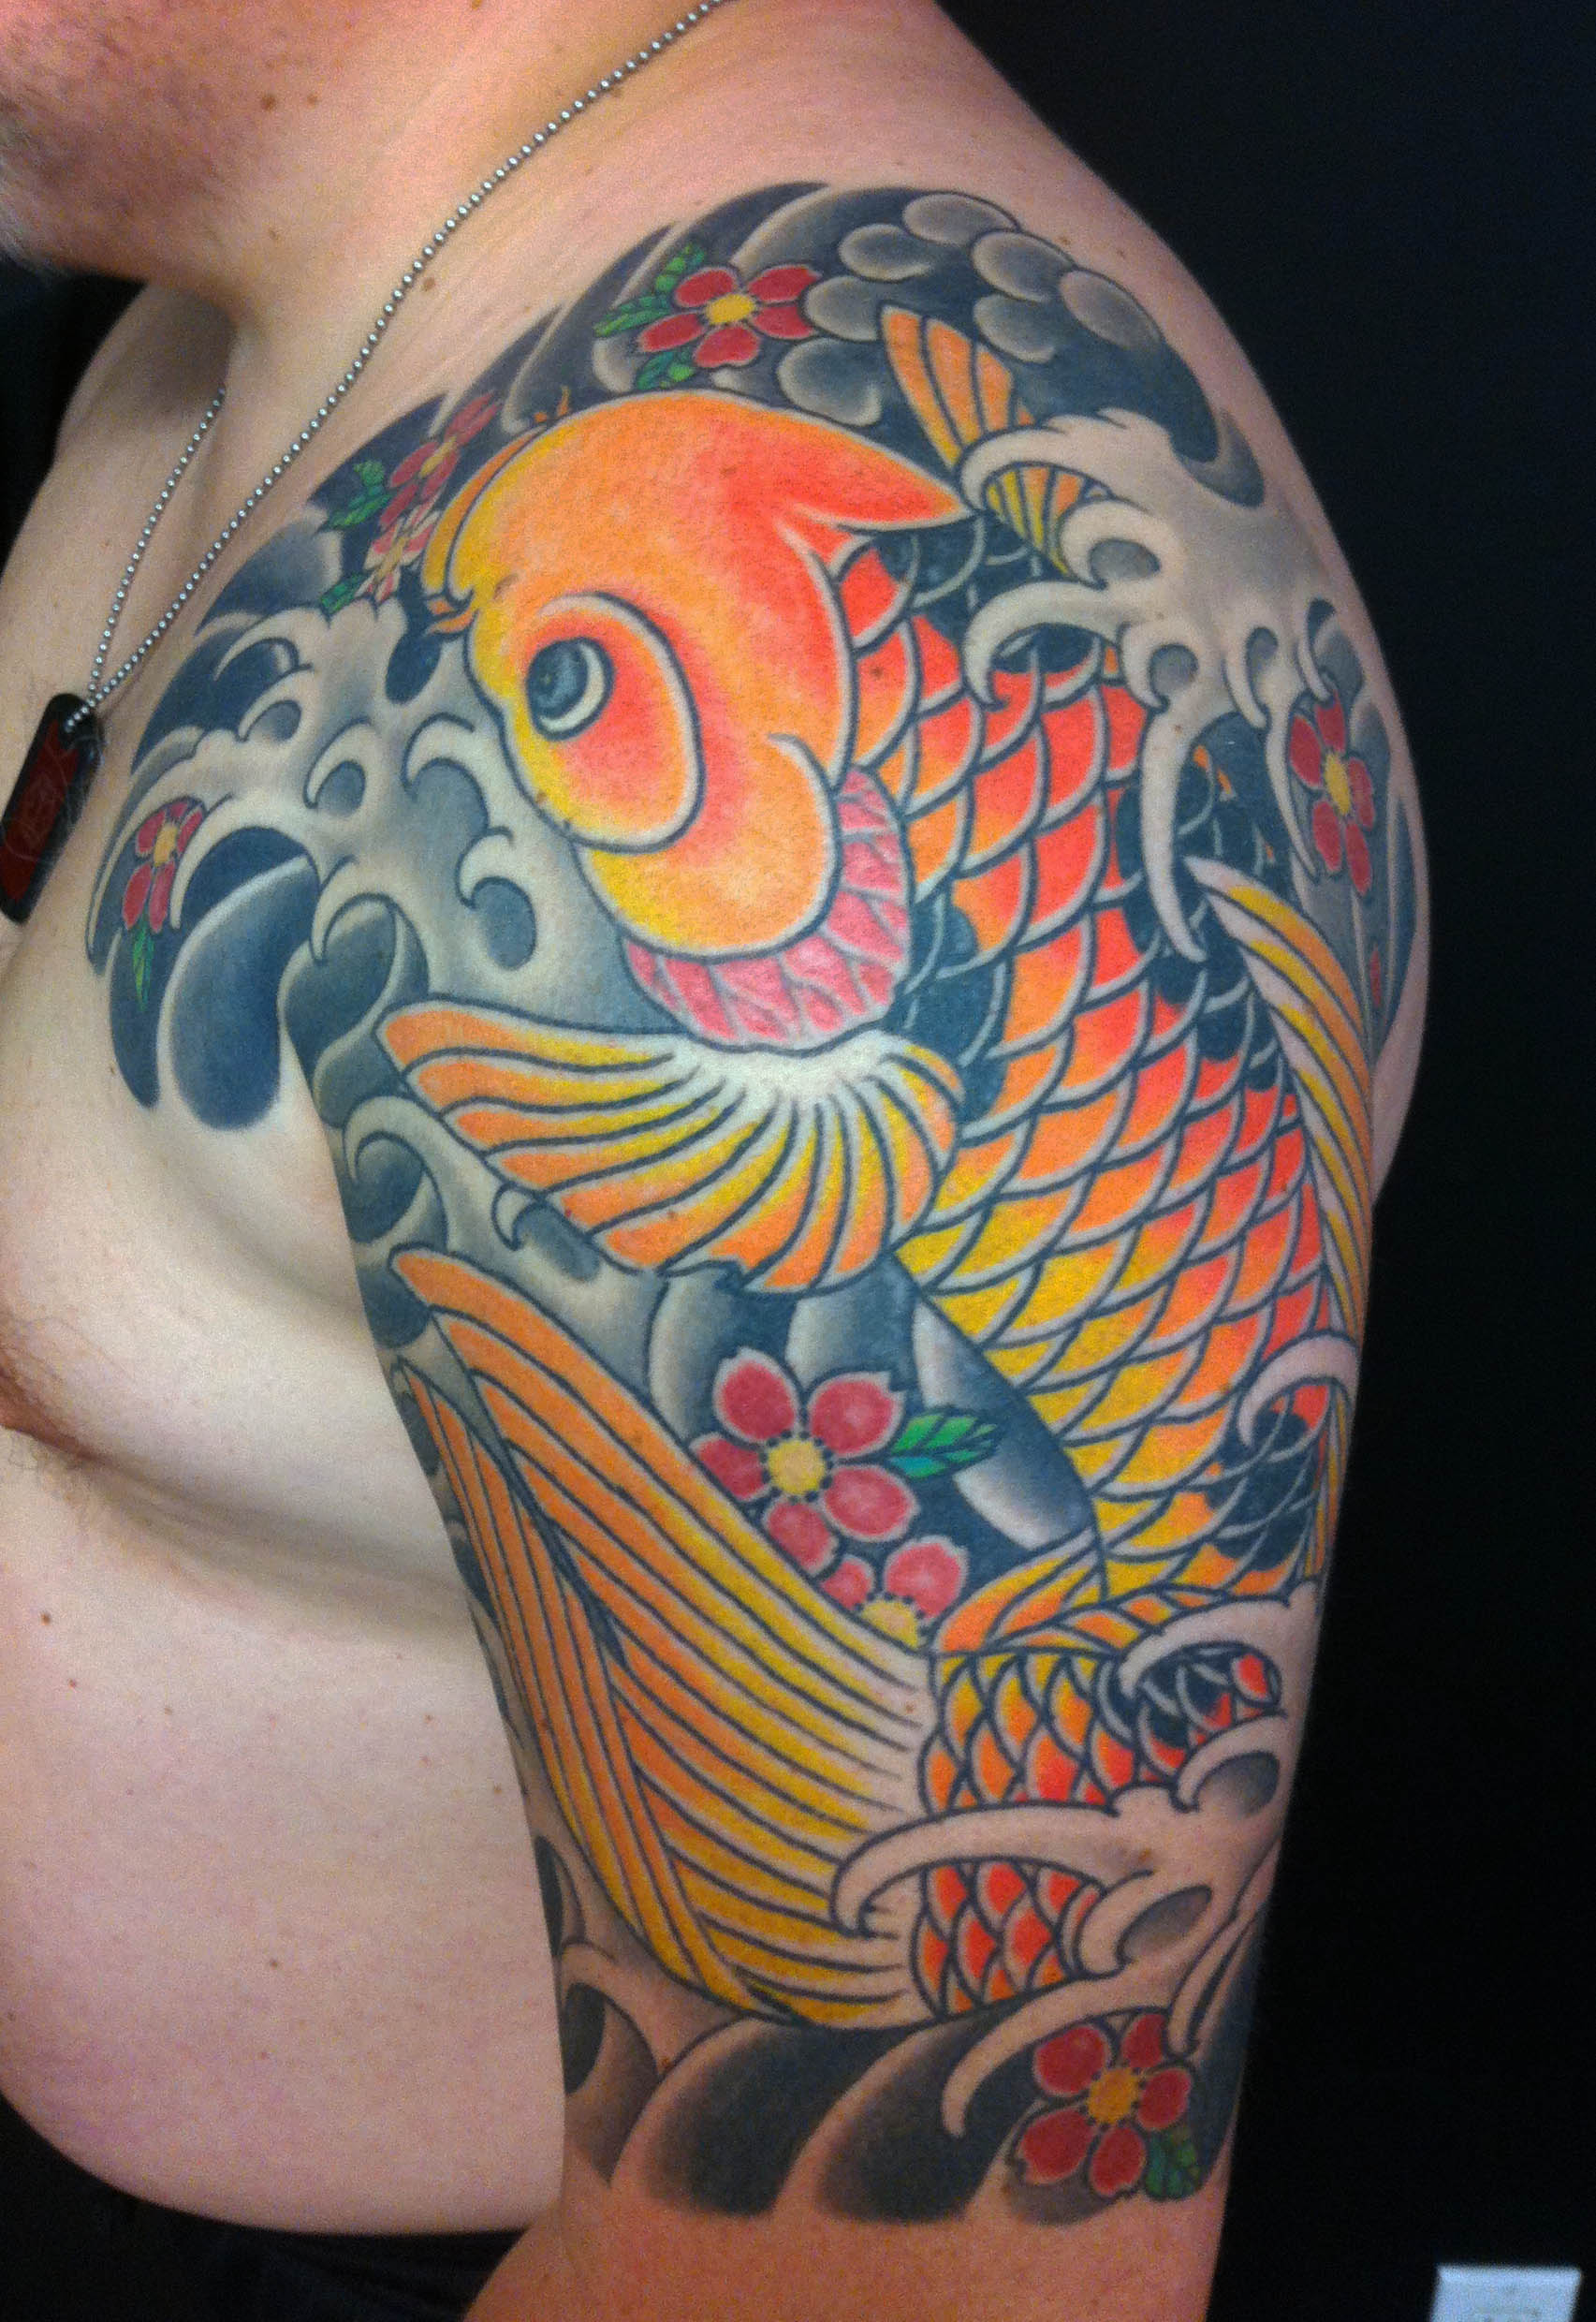 DAVE HARTMAN Big Fish Tattoo